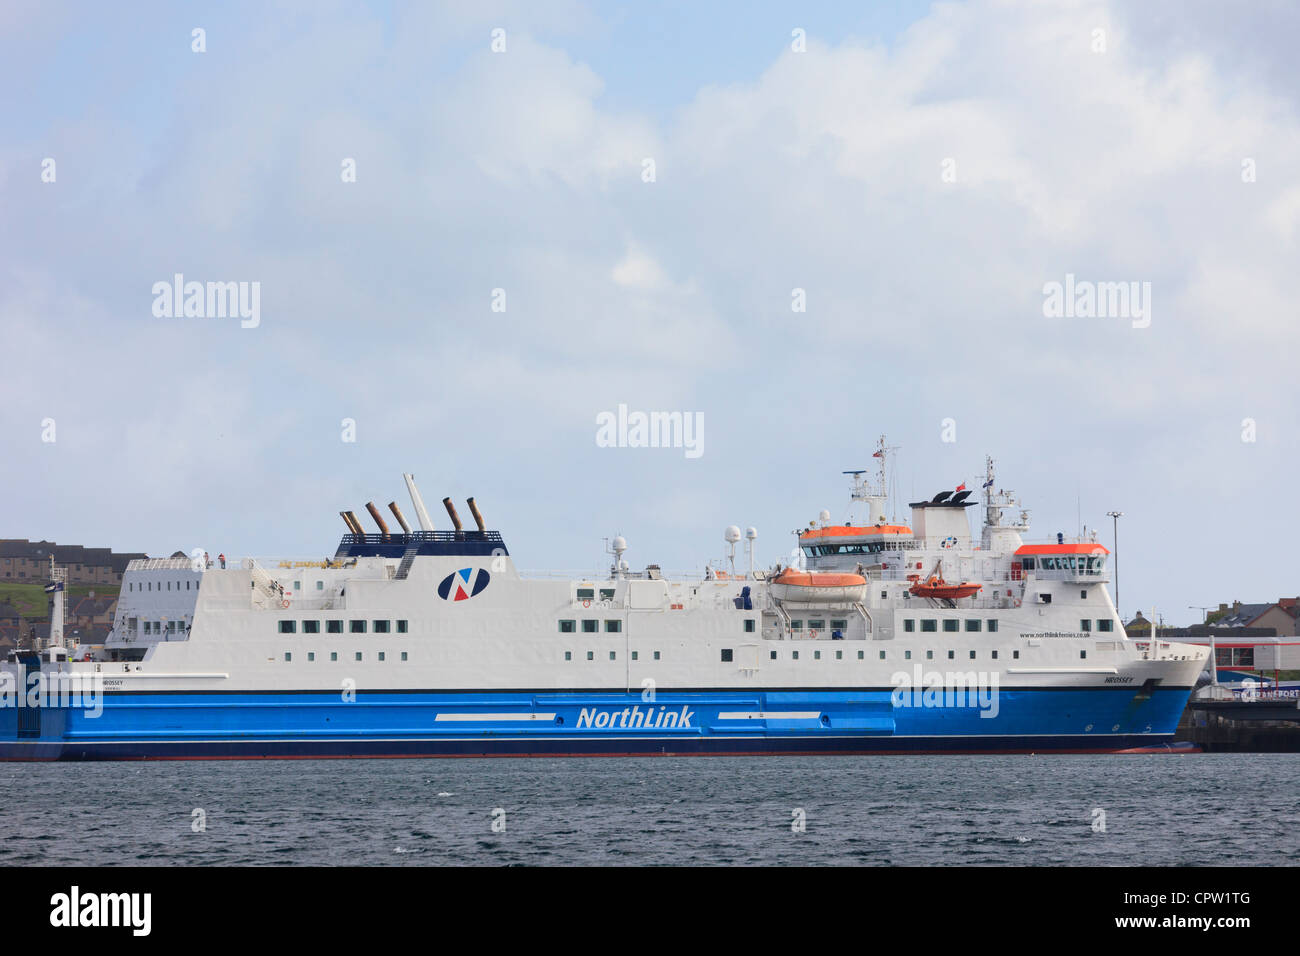 Lerwick, Shetland Islands, Scotland, UK, Britain. Northlink passenger car ferry Hrossey docked in port Stock Photo